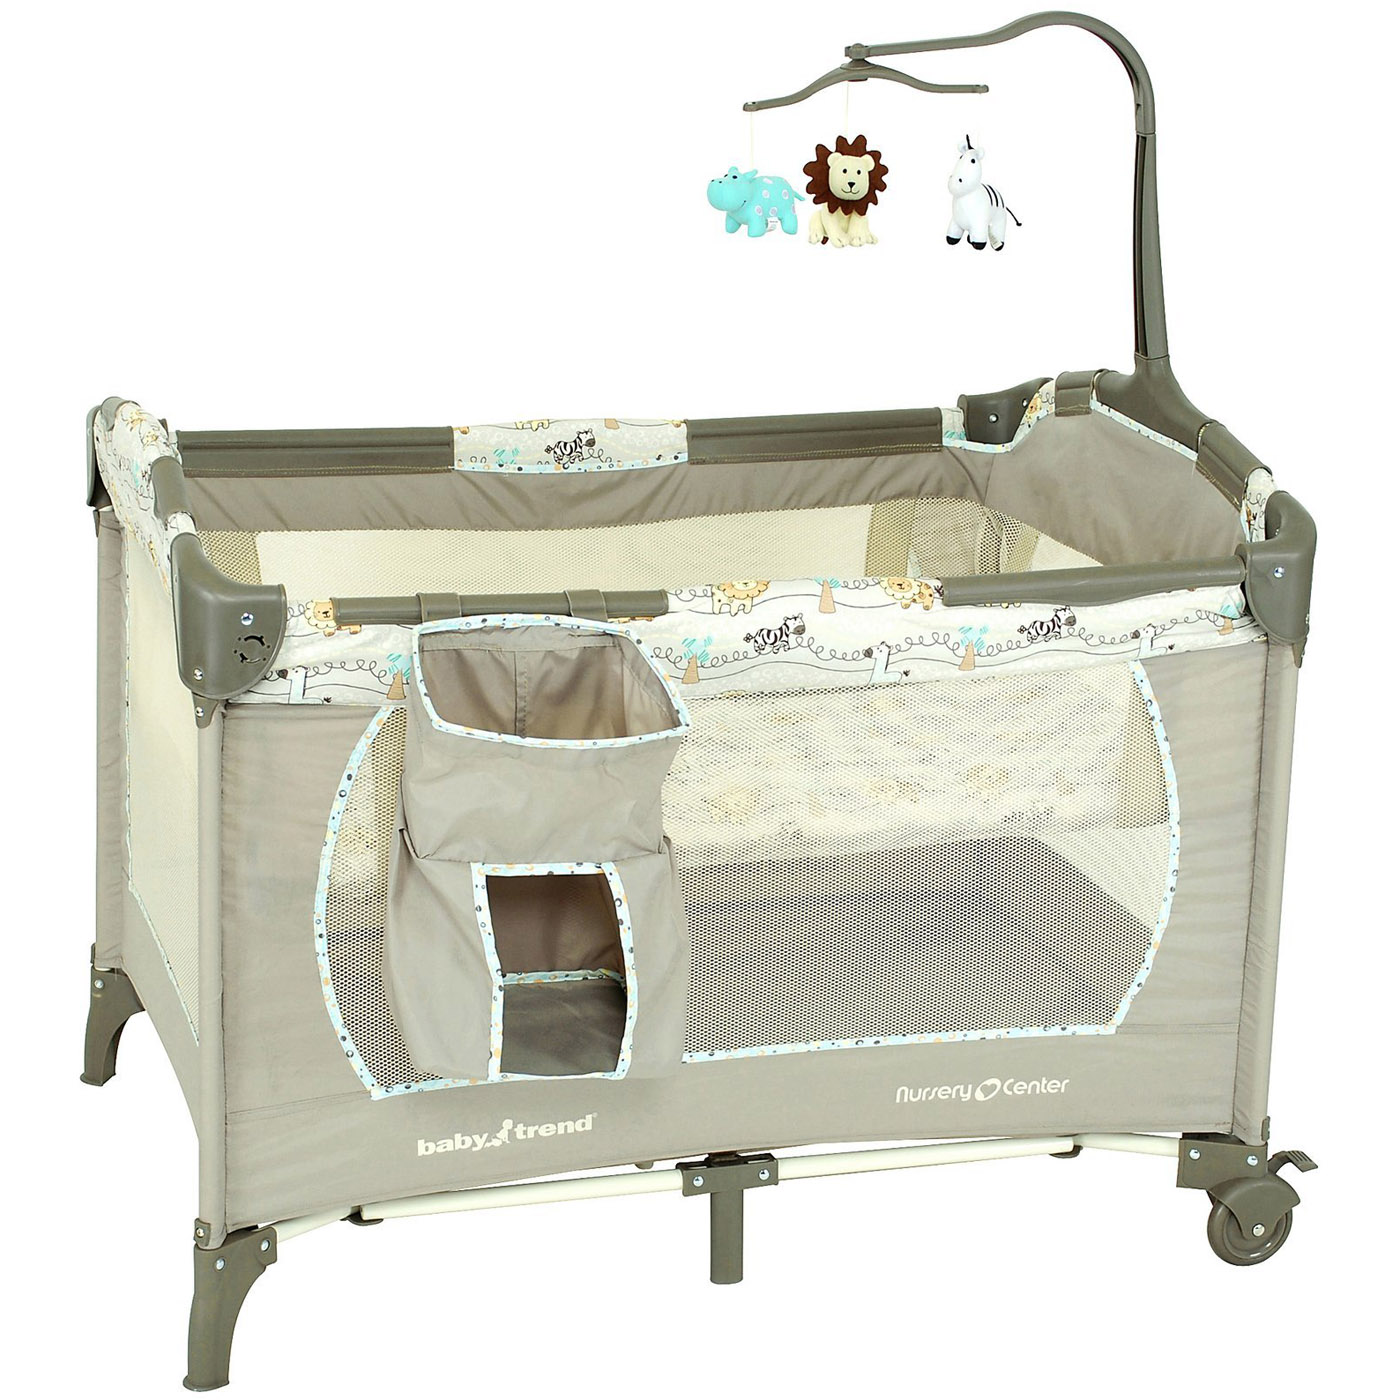 Baby trend манеж-кровать Nursery Center